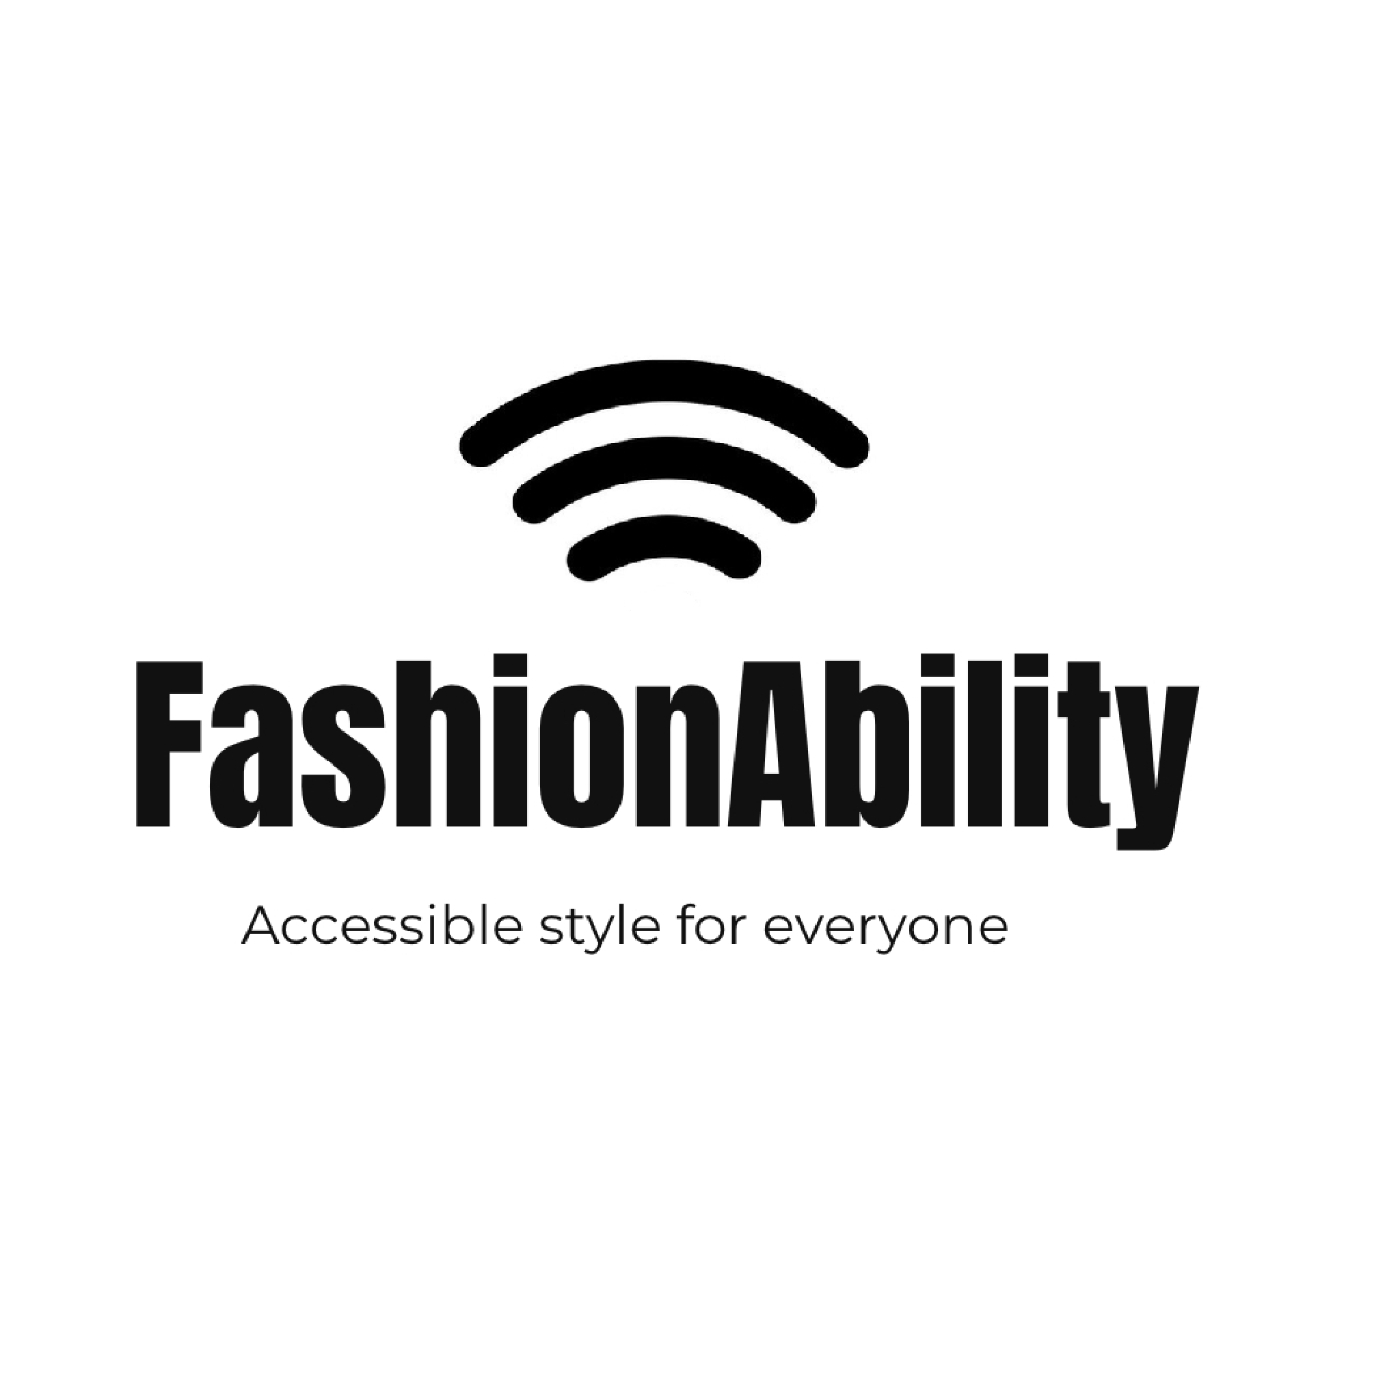 The Fashionability Channel